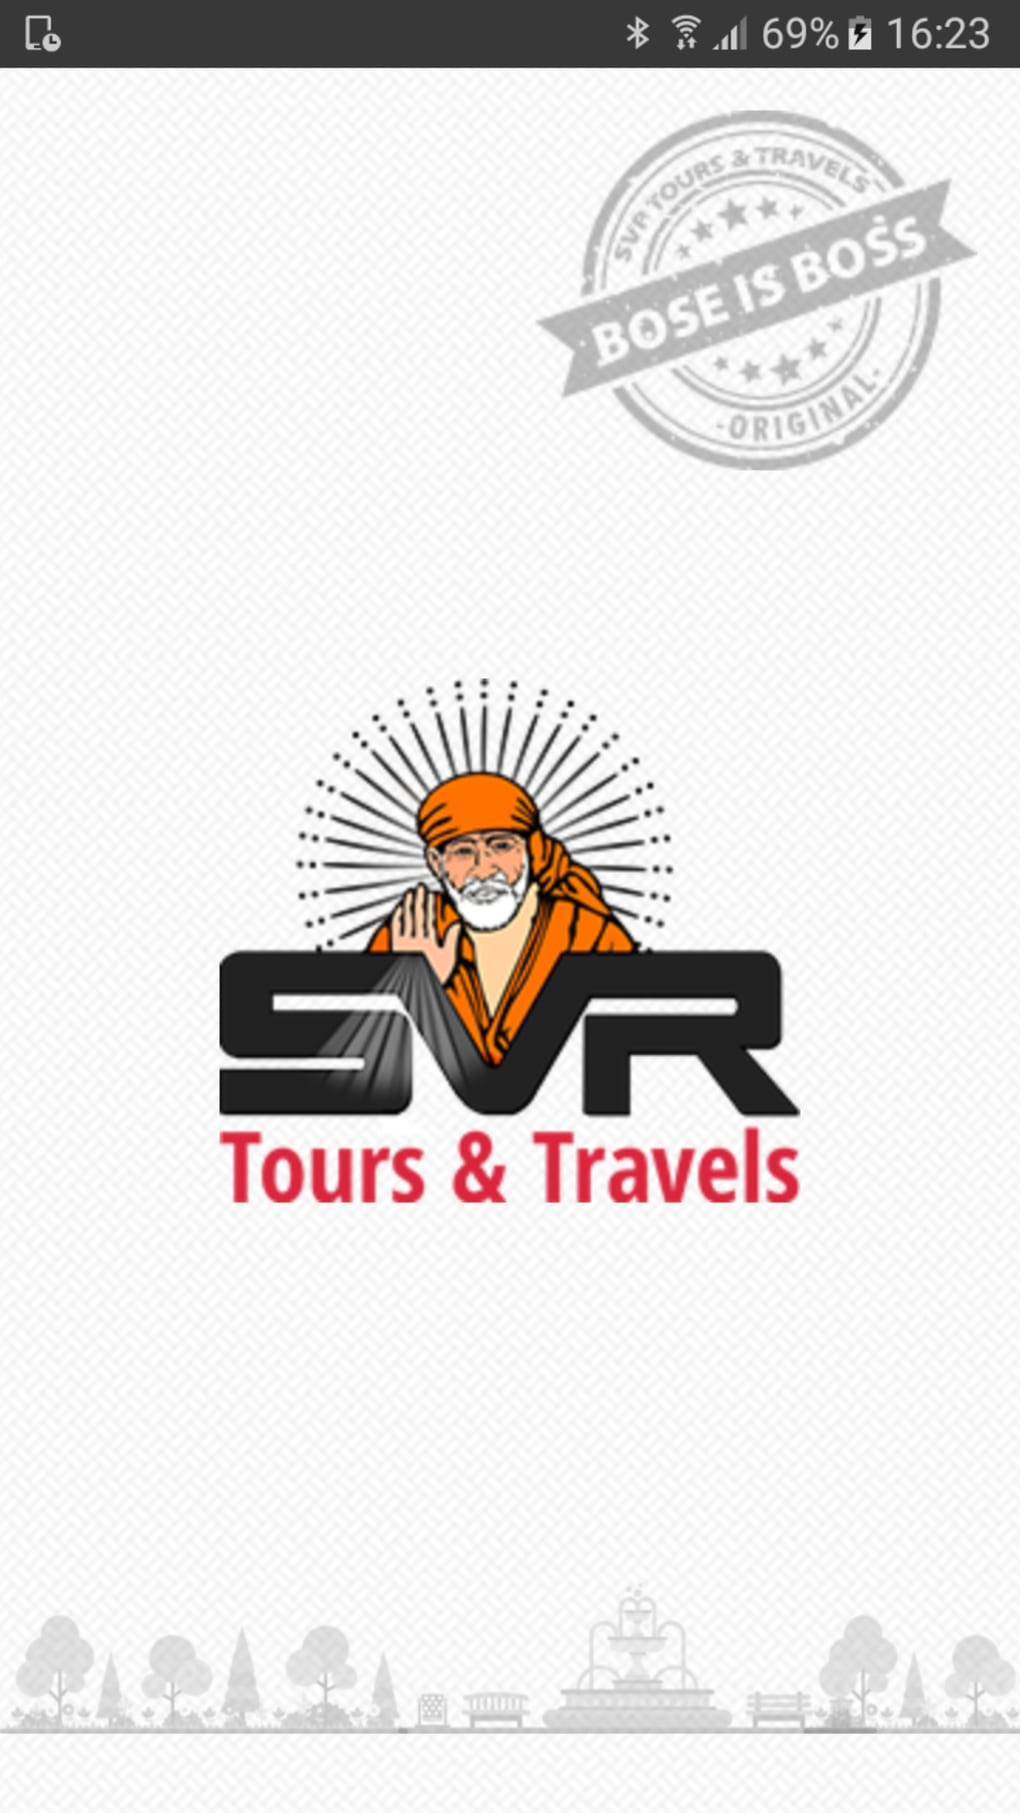 sv tours &travels